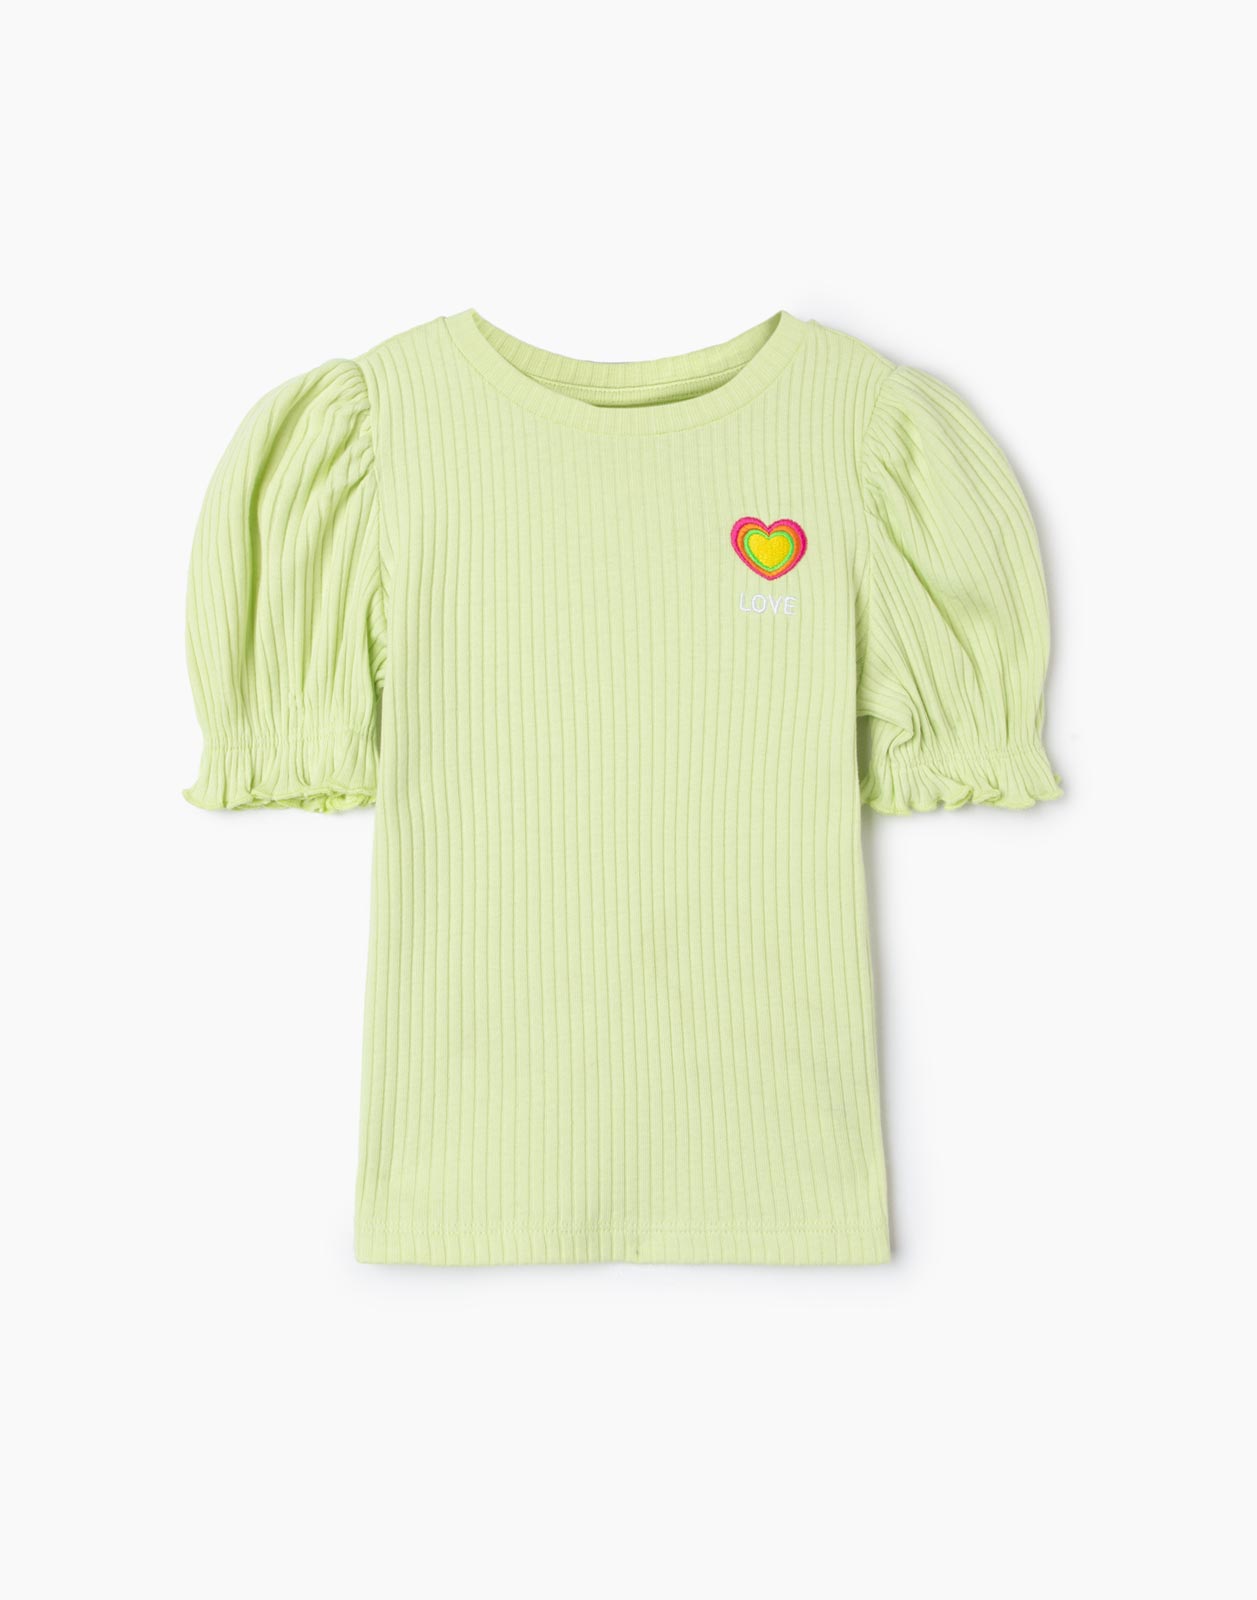 Салатовая футболка Fitted с вышивкой для девочки 9-12мес/80